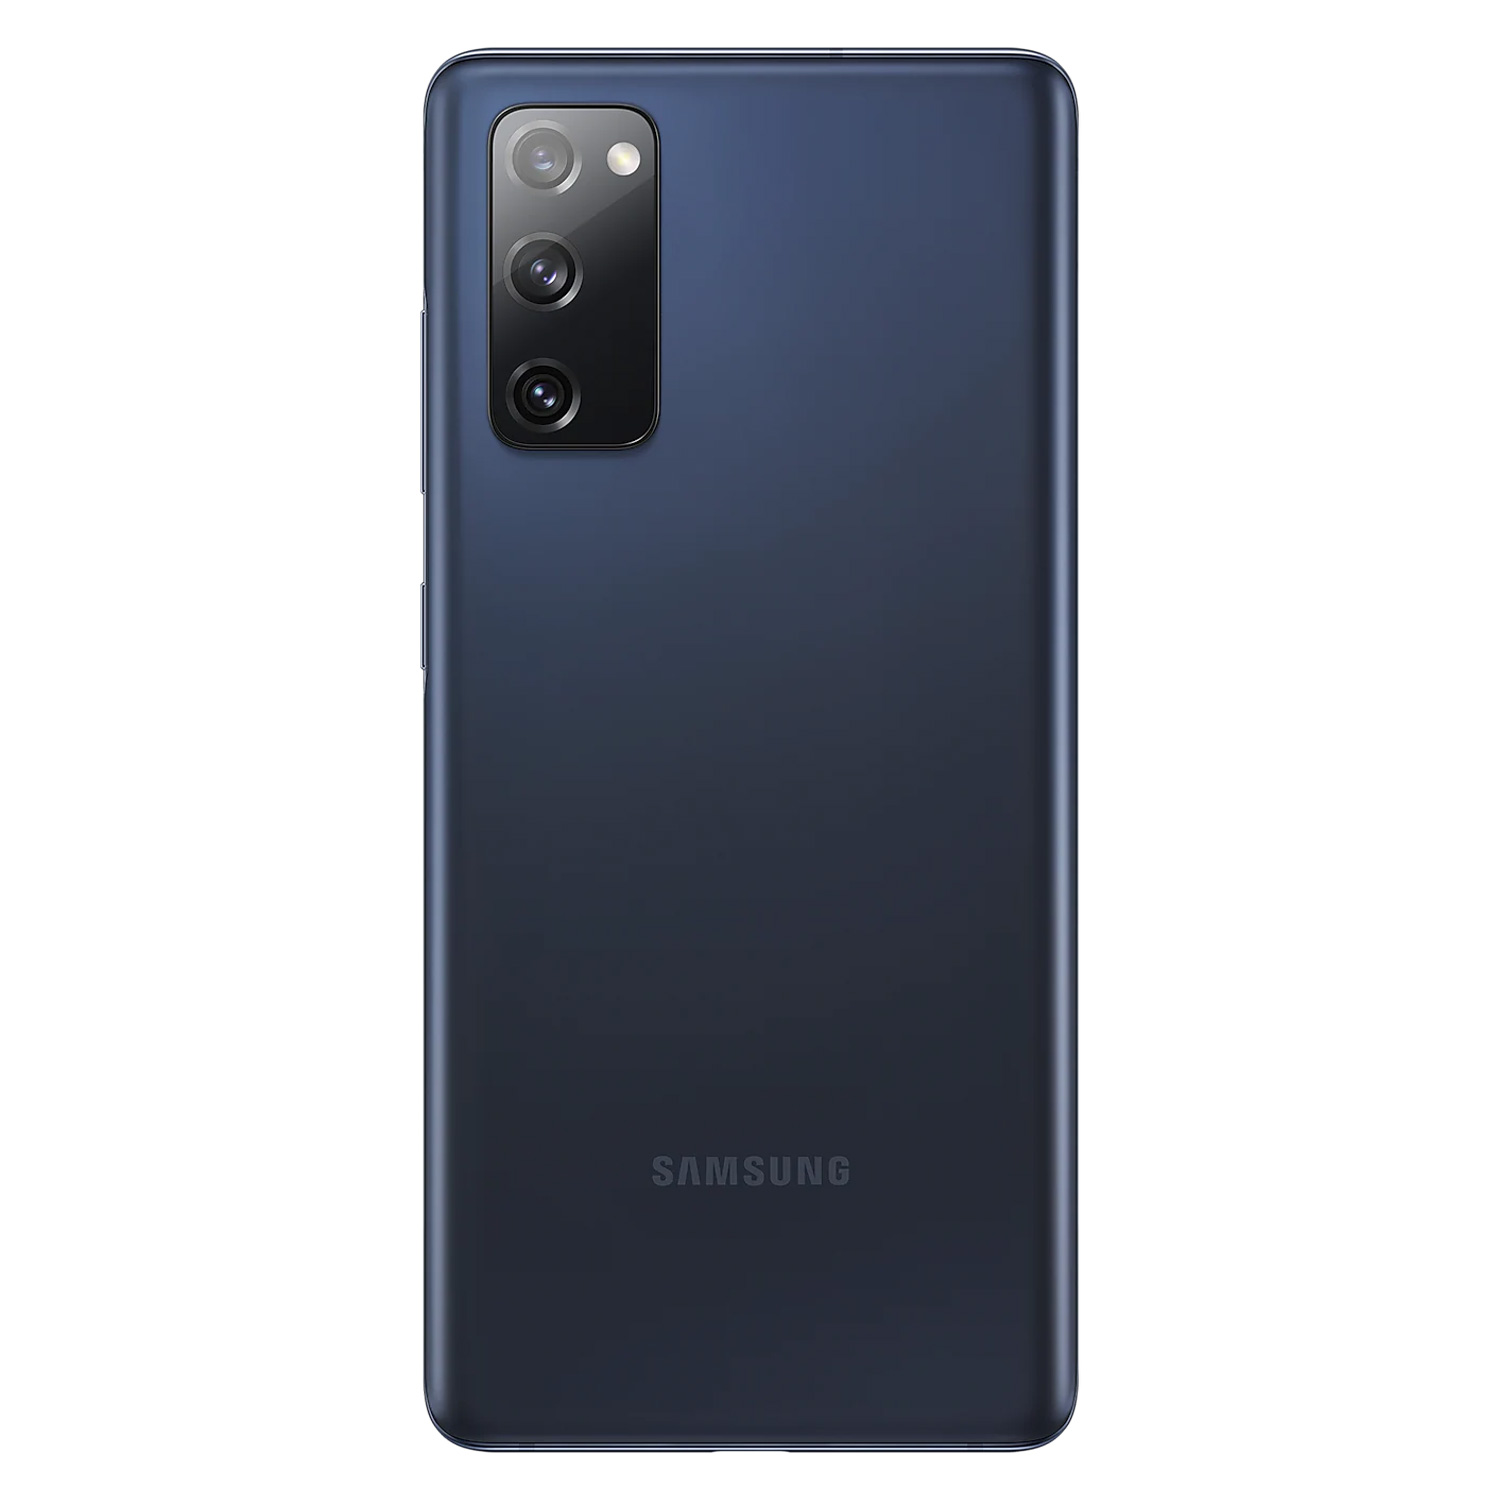 Smartphone Samsung Galaxy S20 FE 5G *CPO* G781V 128GB 6GB RAM Dual SIM Tela 6.5" - Azul Meia Noite